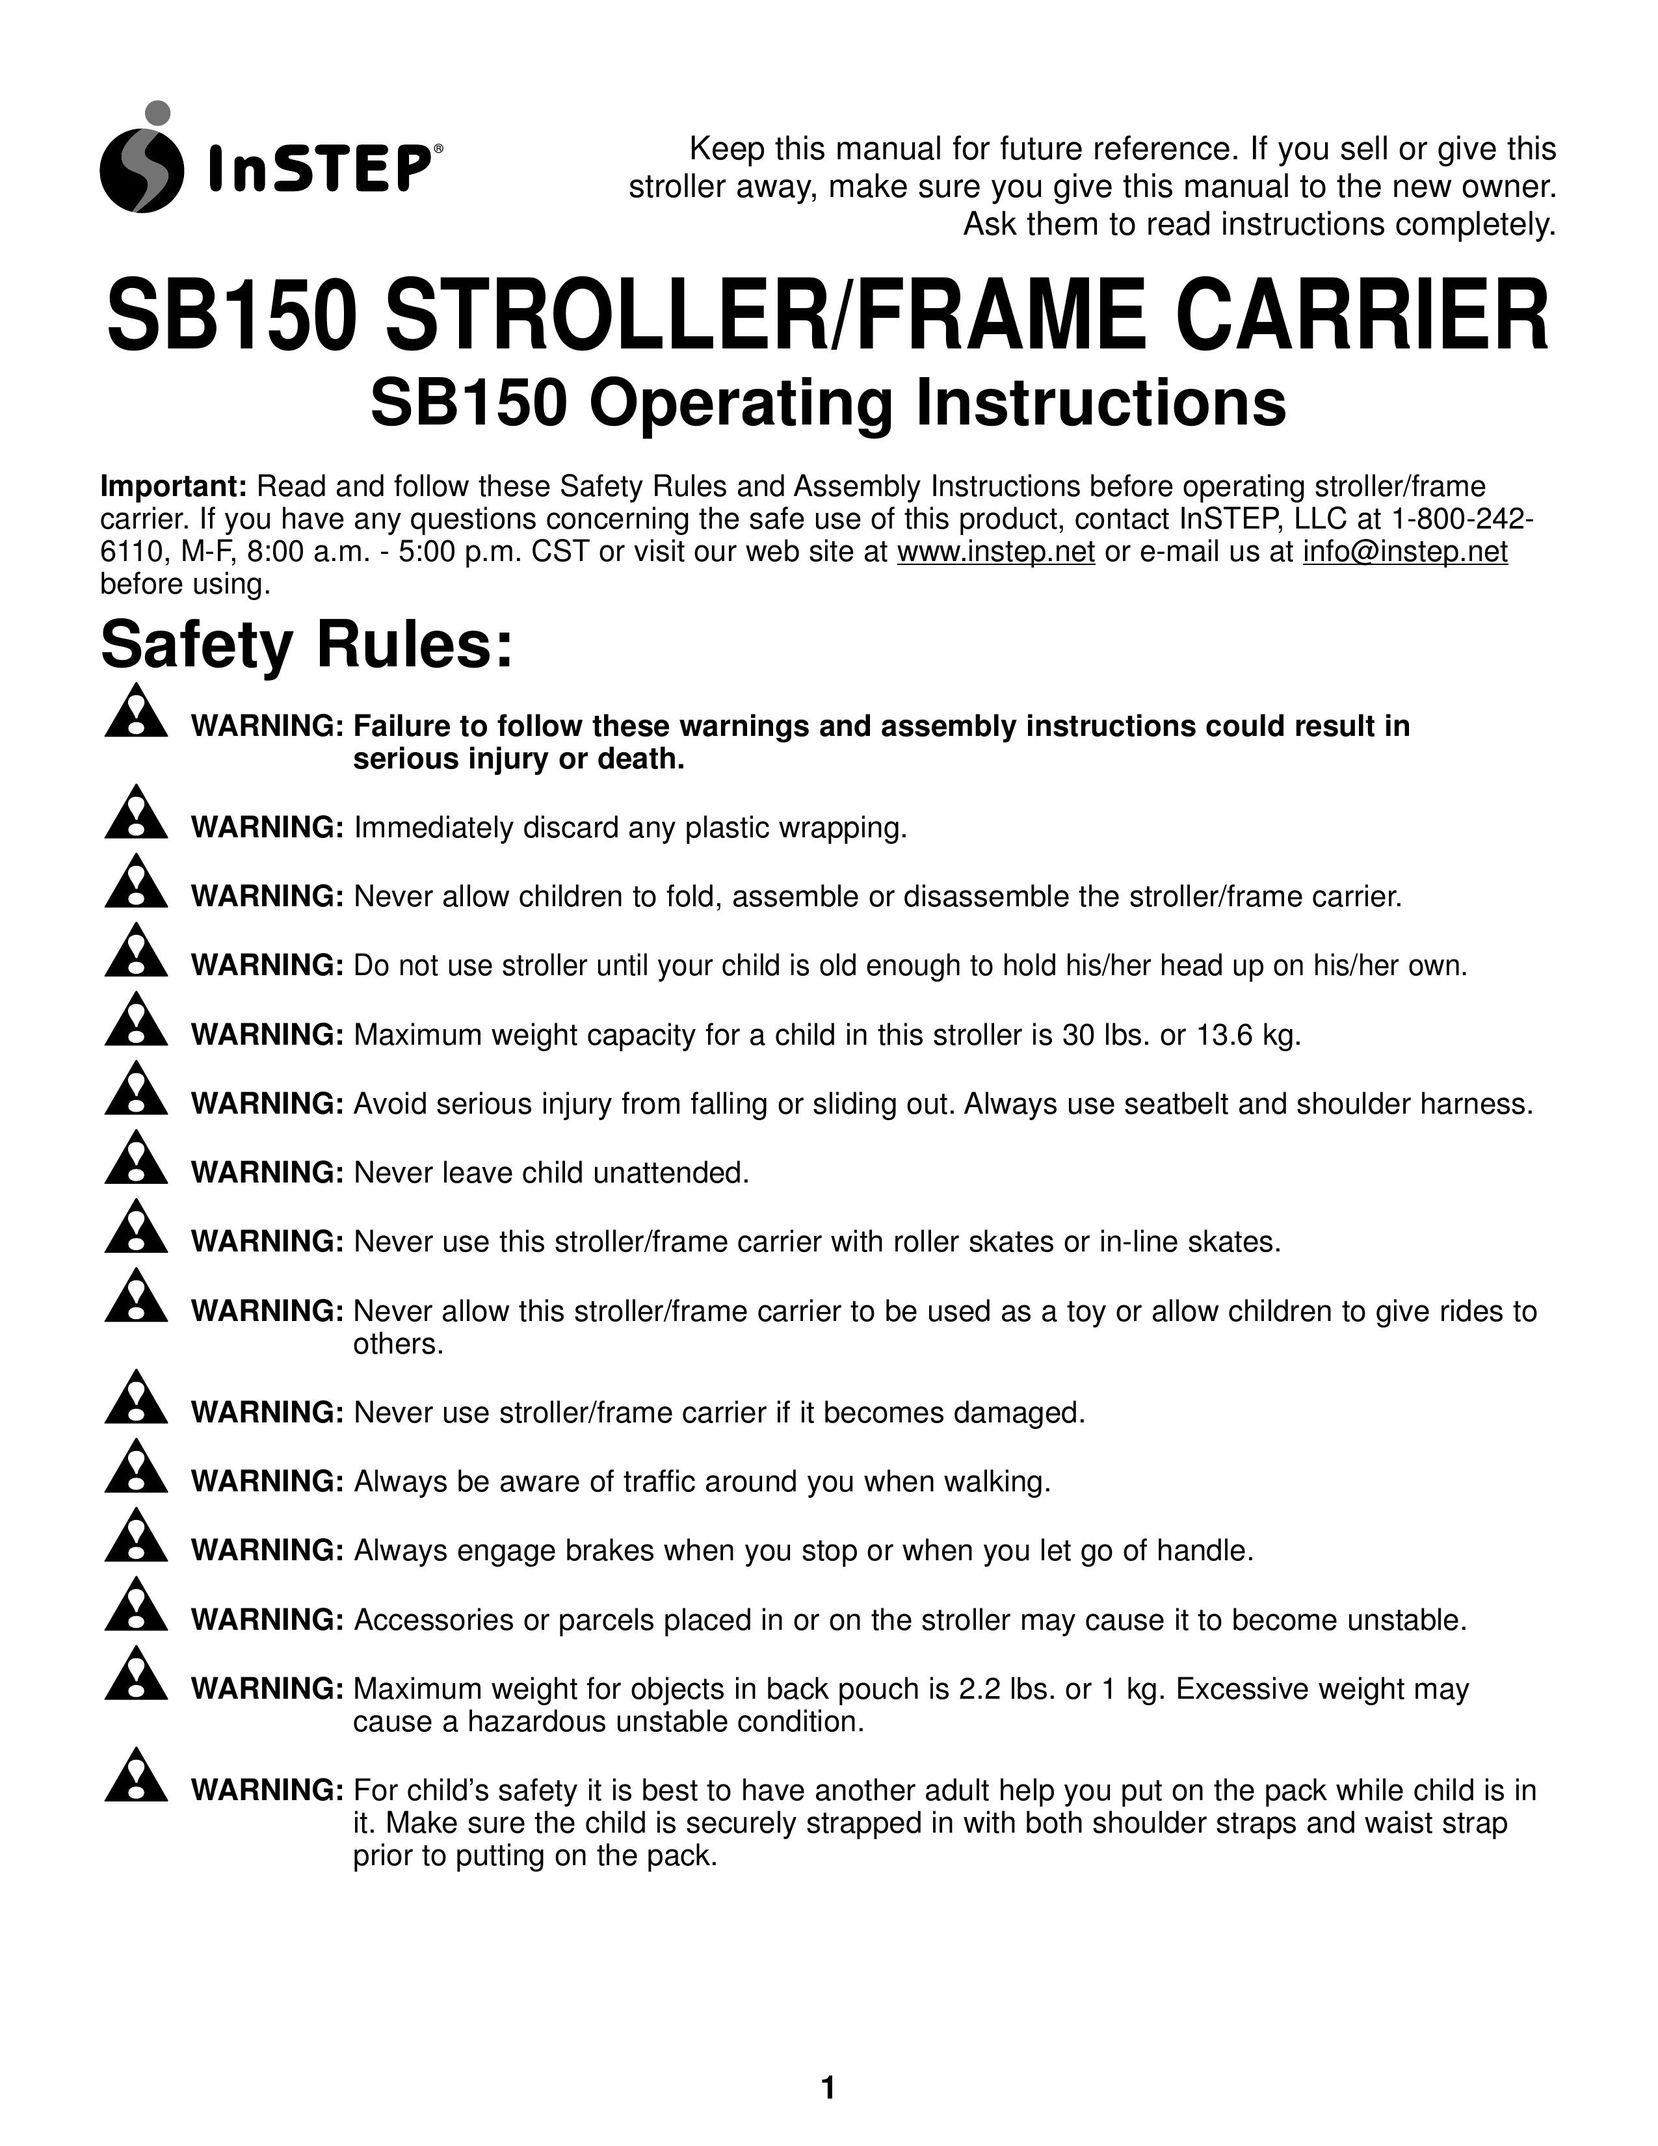 InStep SB150 Stroller User Manual